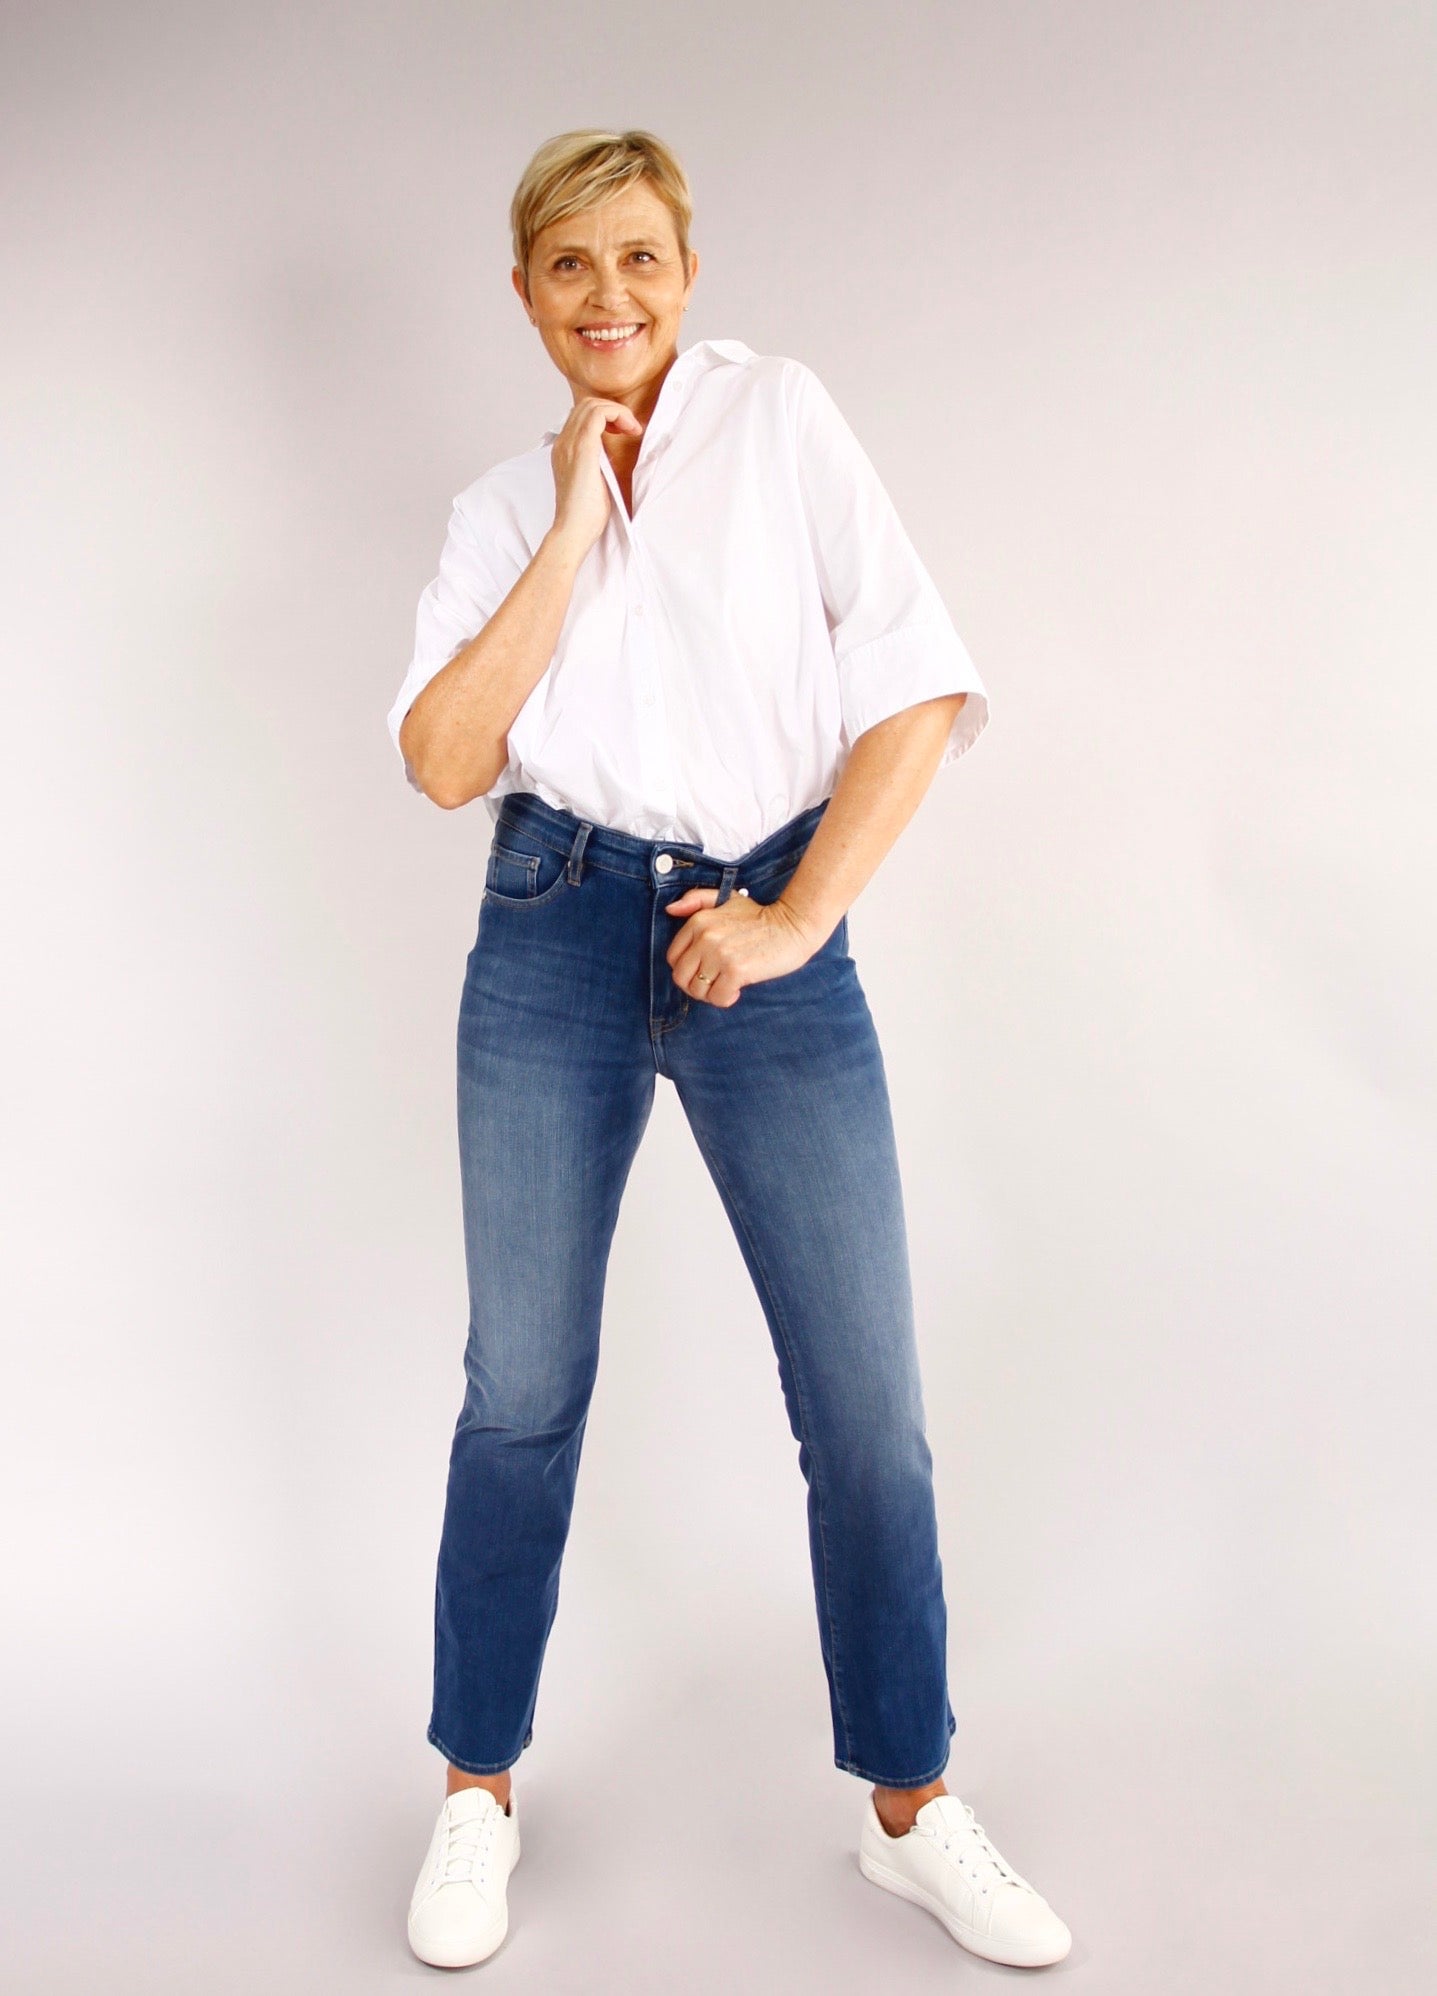 Erica Ocean blue Jeans - Dame - Tailored leg - High waist - Stretchy